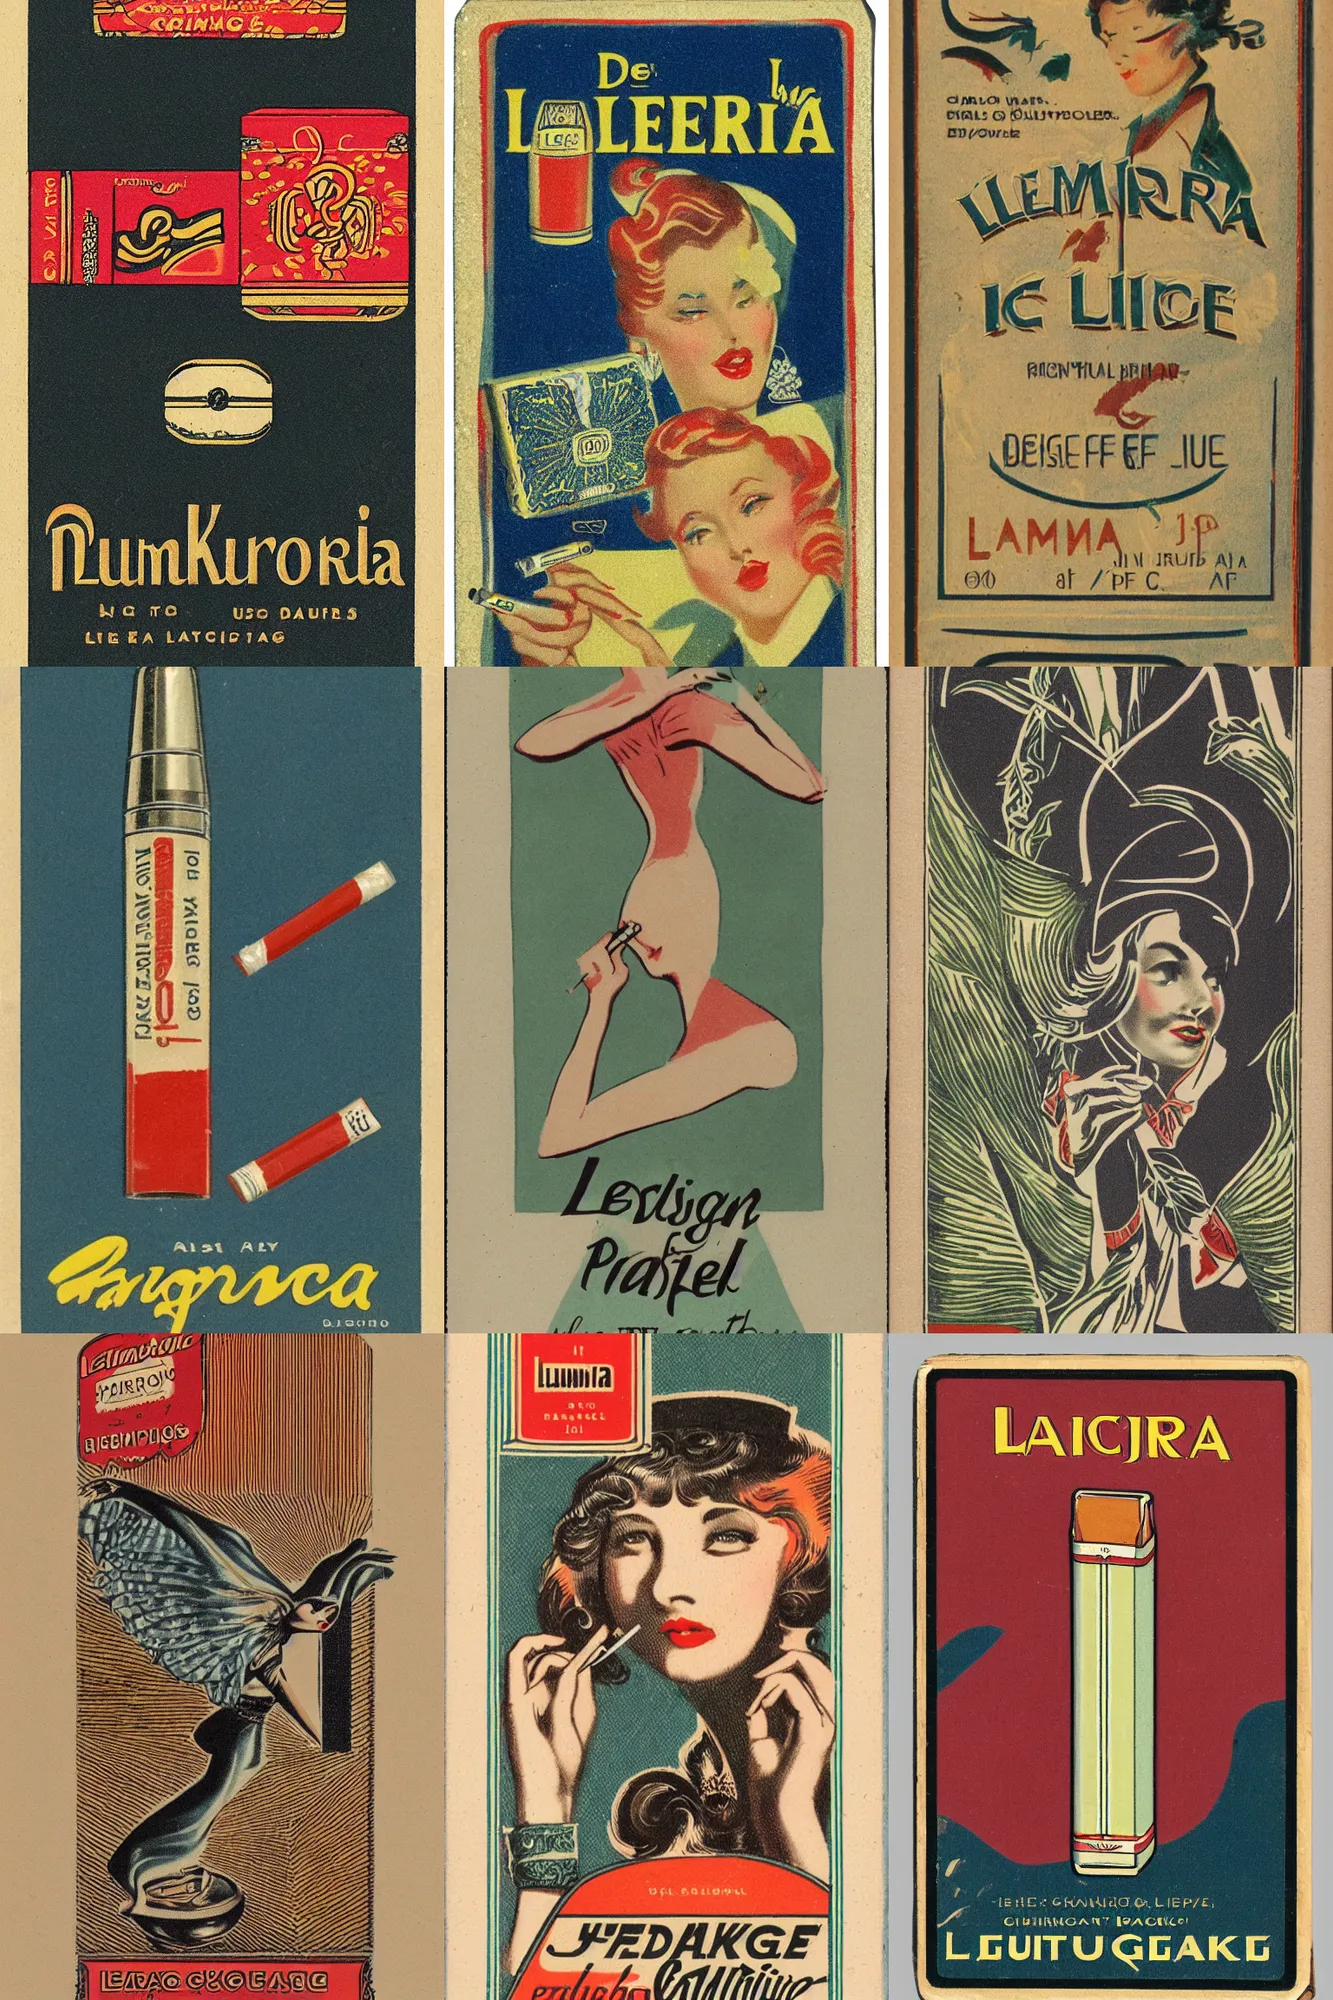 Prompt: design for a vintage cigarette pack from lemuria